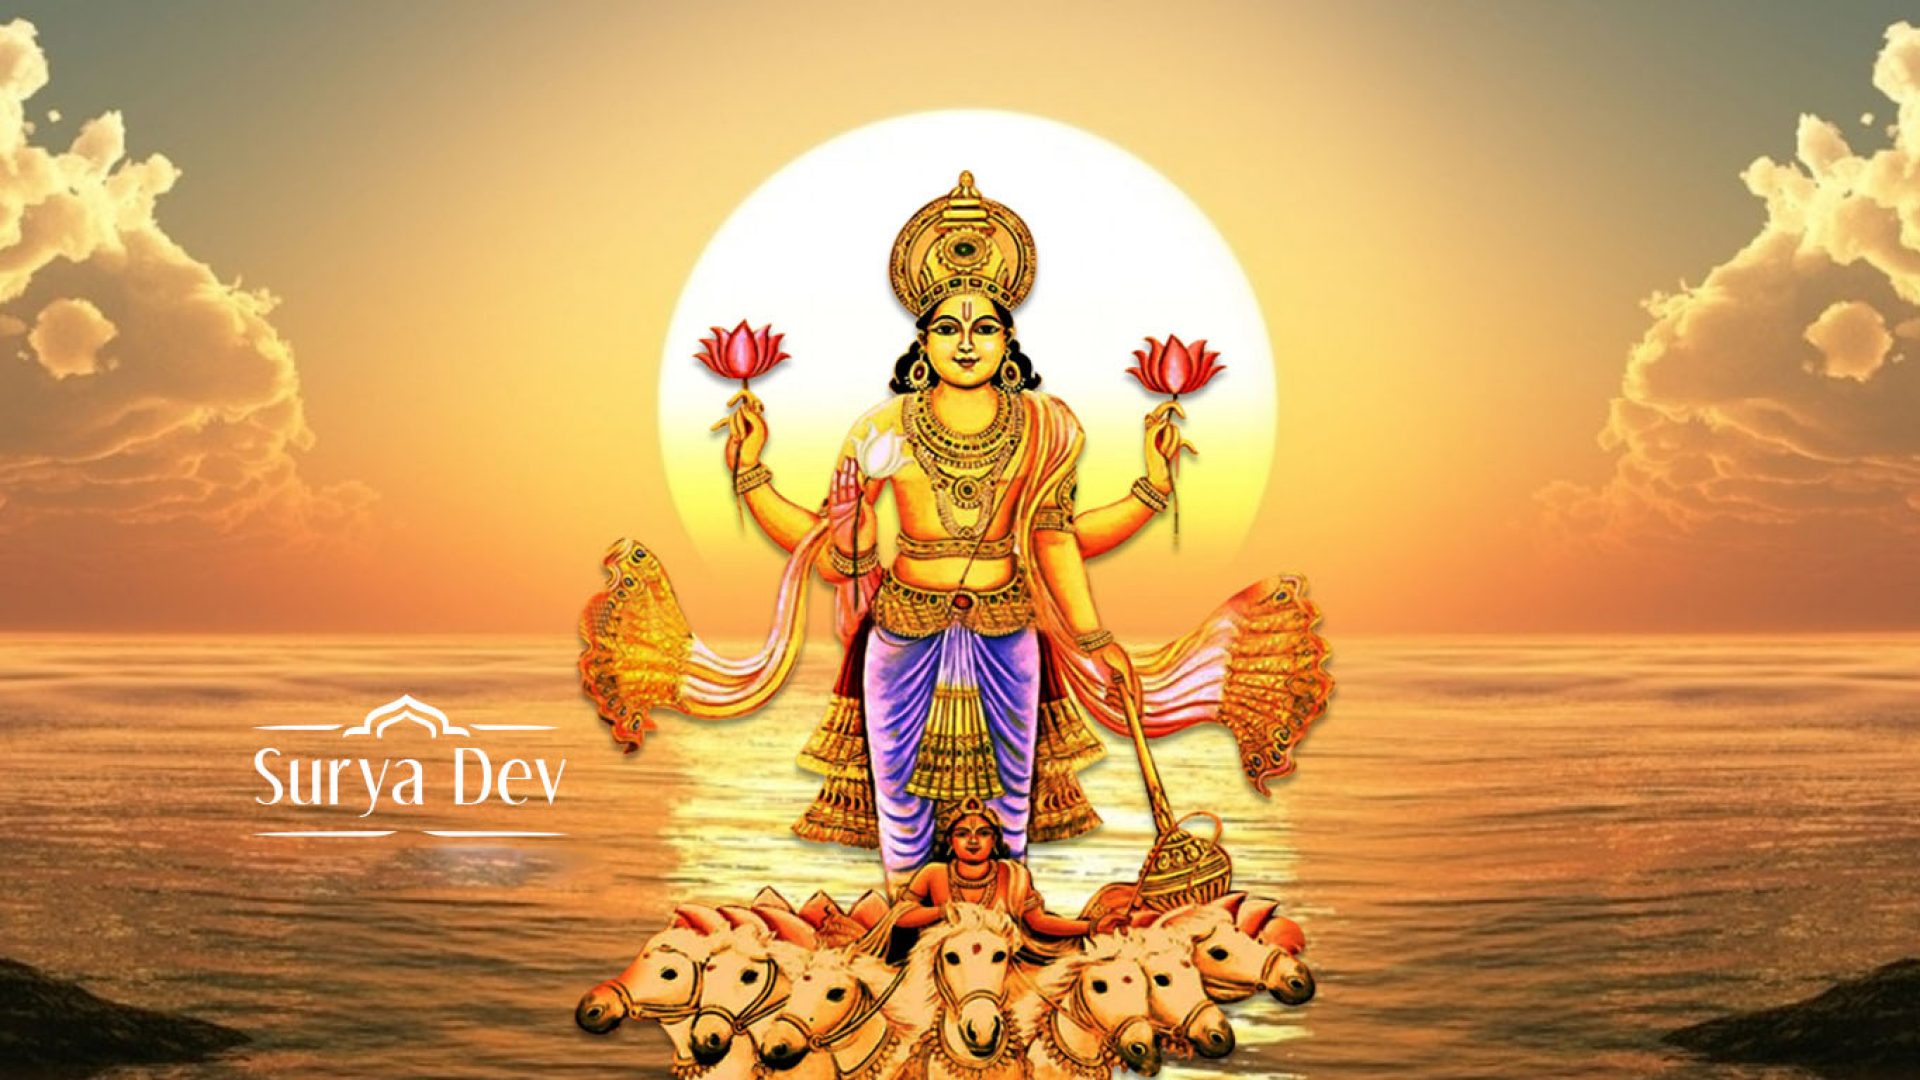 Surya Dev Image Hindu Gods And Goddesses